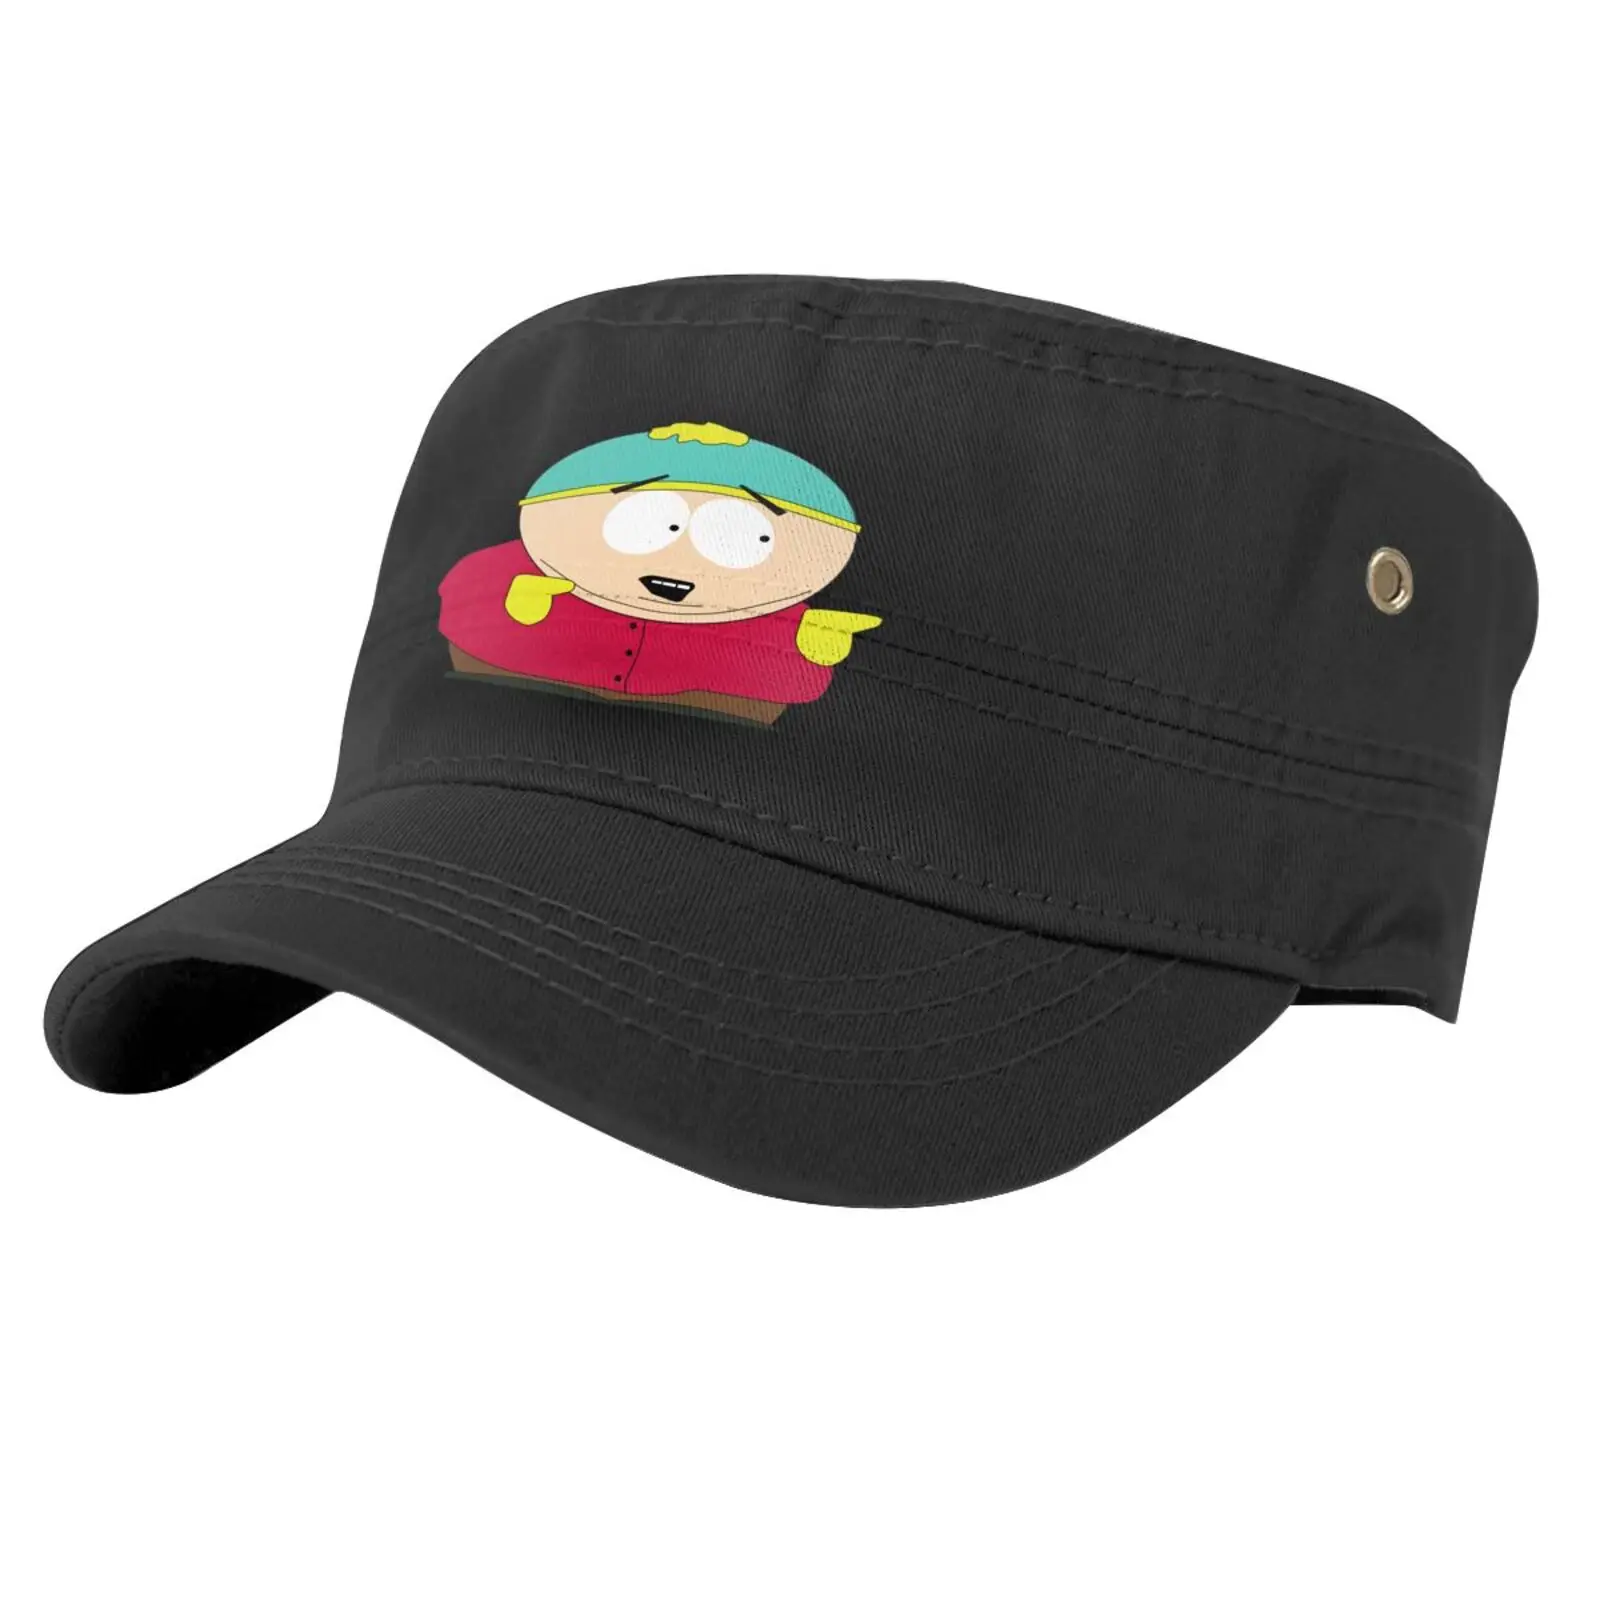 

Cartman Screw You Guys Custom Made 915 Cap Caps Hat For Boy Knit Hat Beret Women Men's Cap Men's Caps Cowboy Hats Baseball Cap